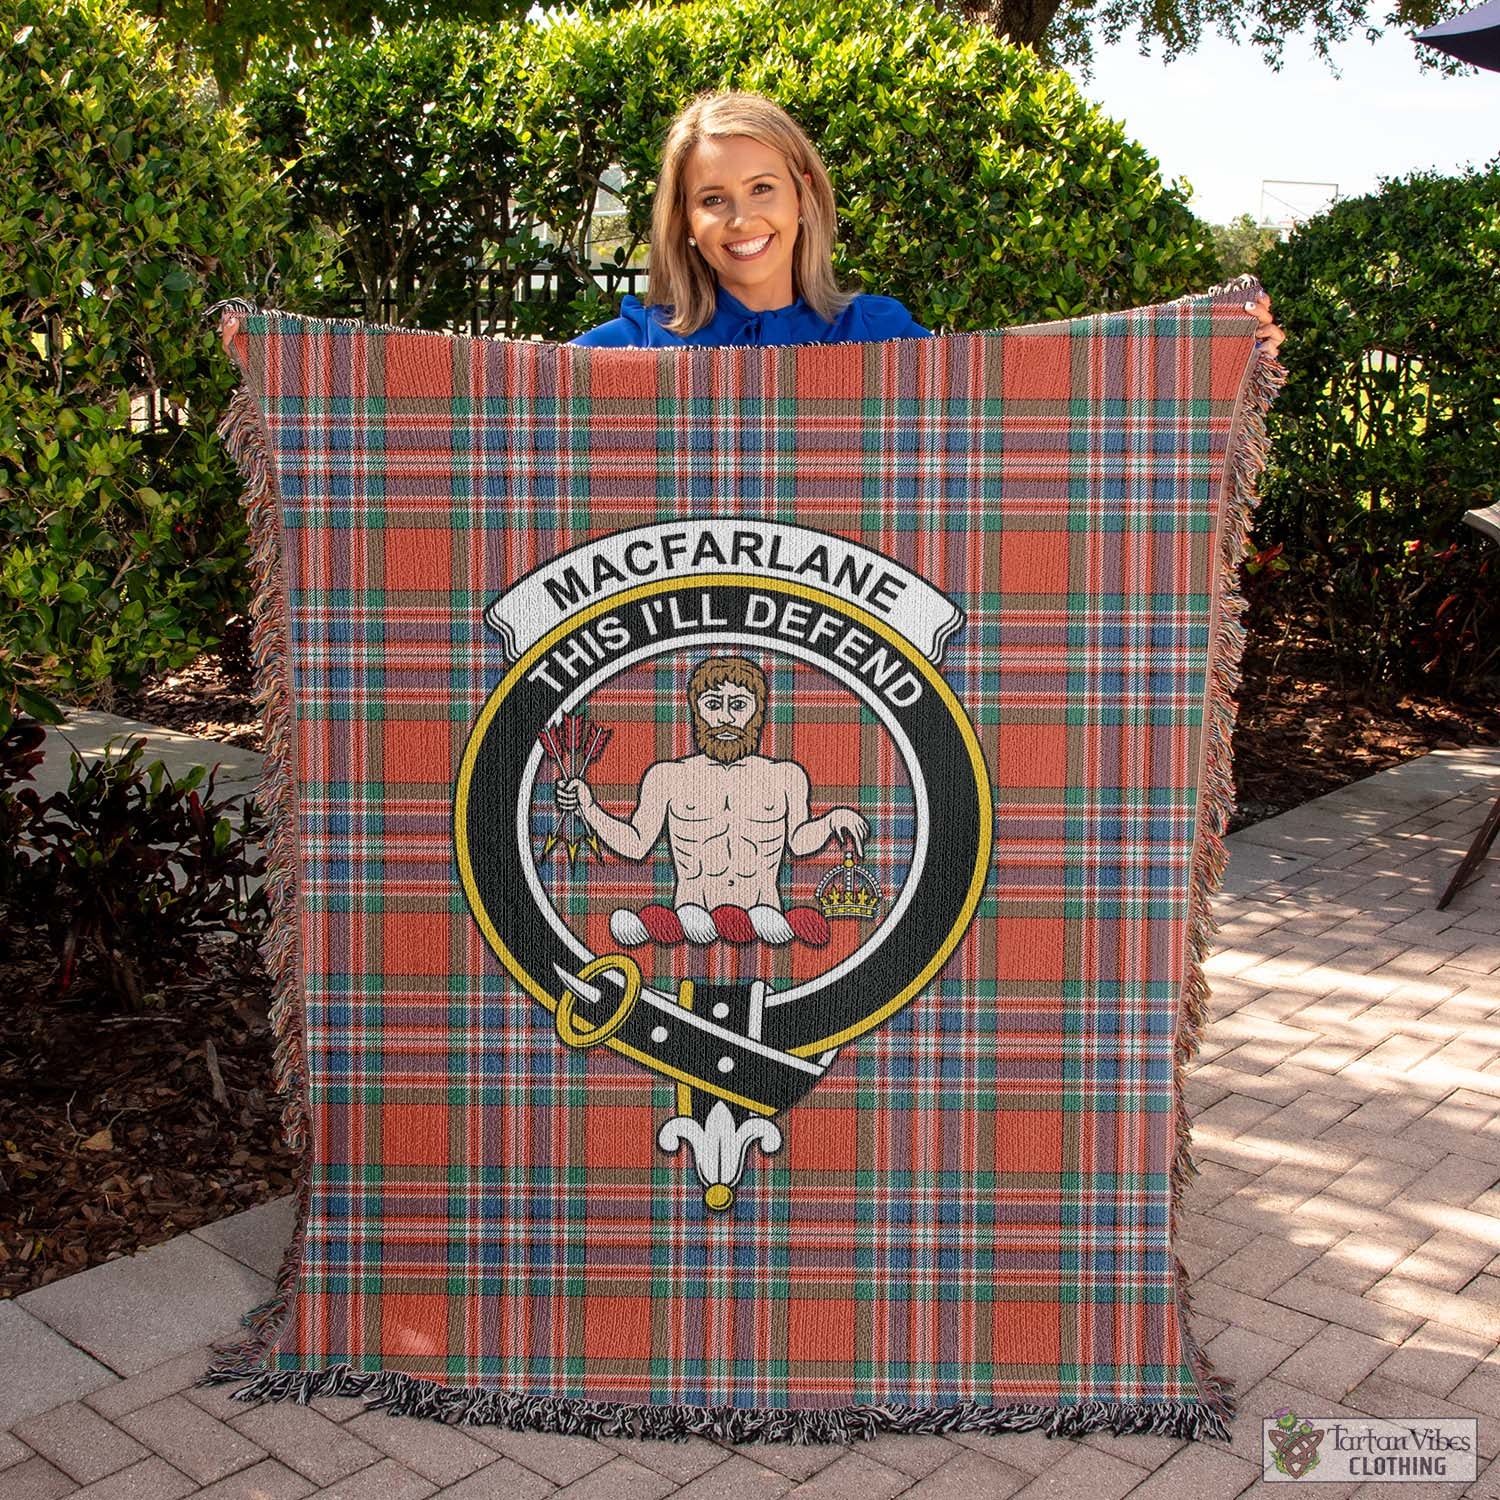 Tartan Vibes Clothing MacFarlane Ancient Tartan Woven Blanket with Family Crest